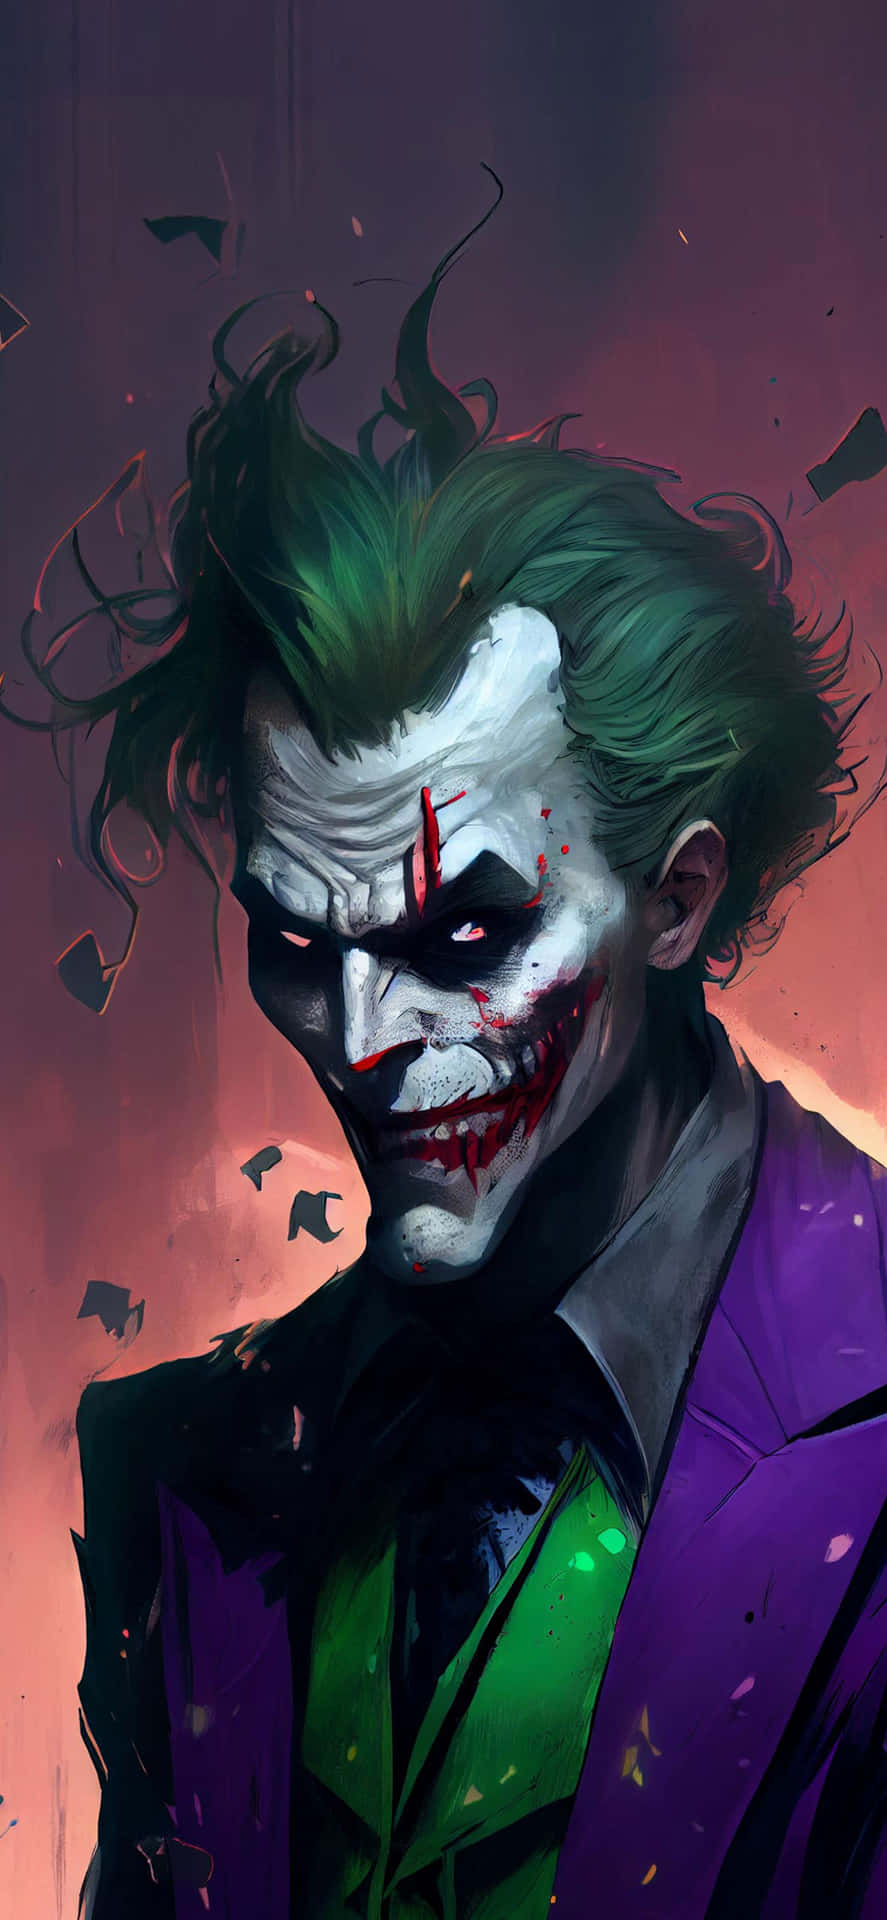 The Dark Jester - The Enigmatic Joker In Thoughtful Solitude